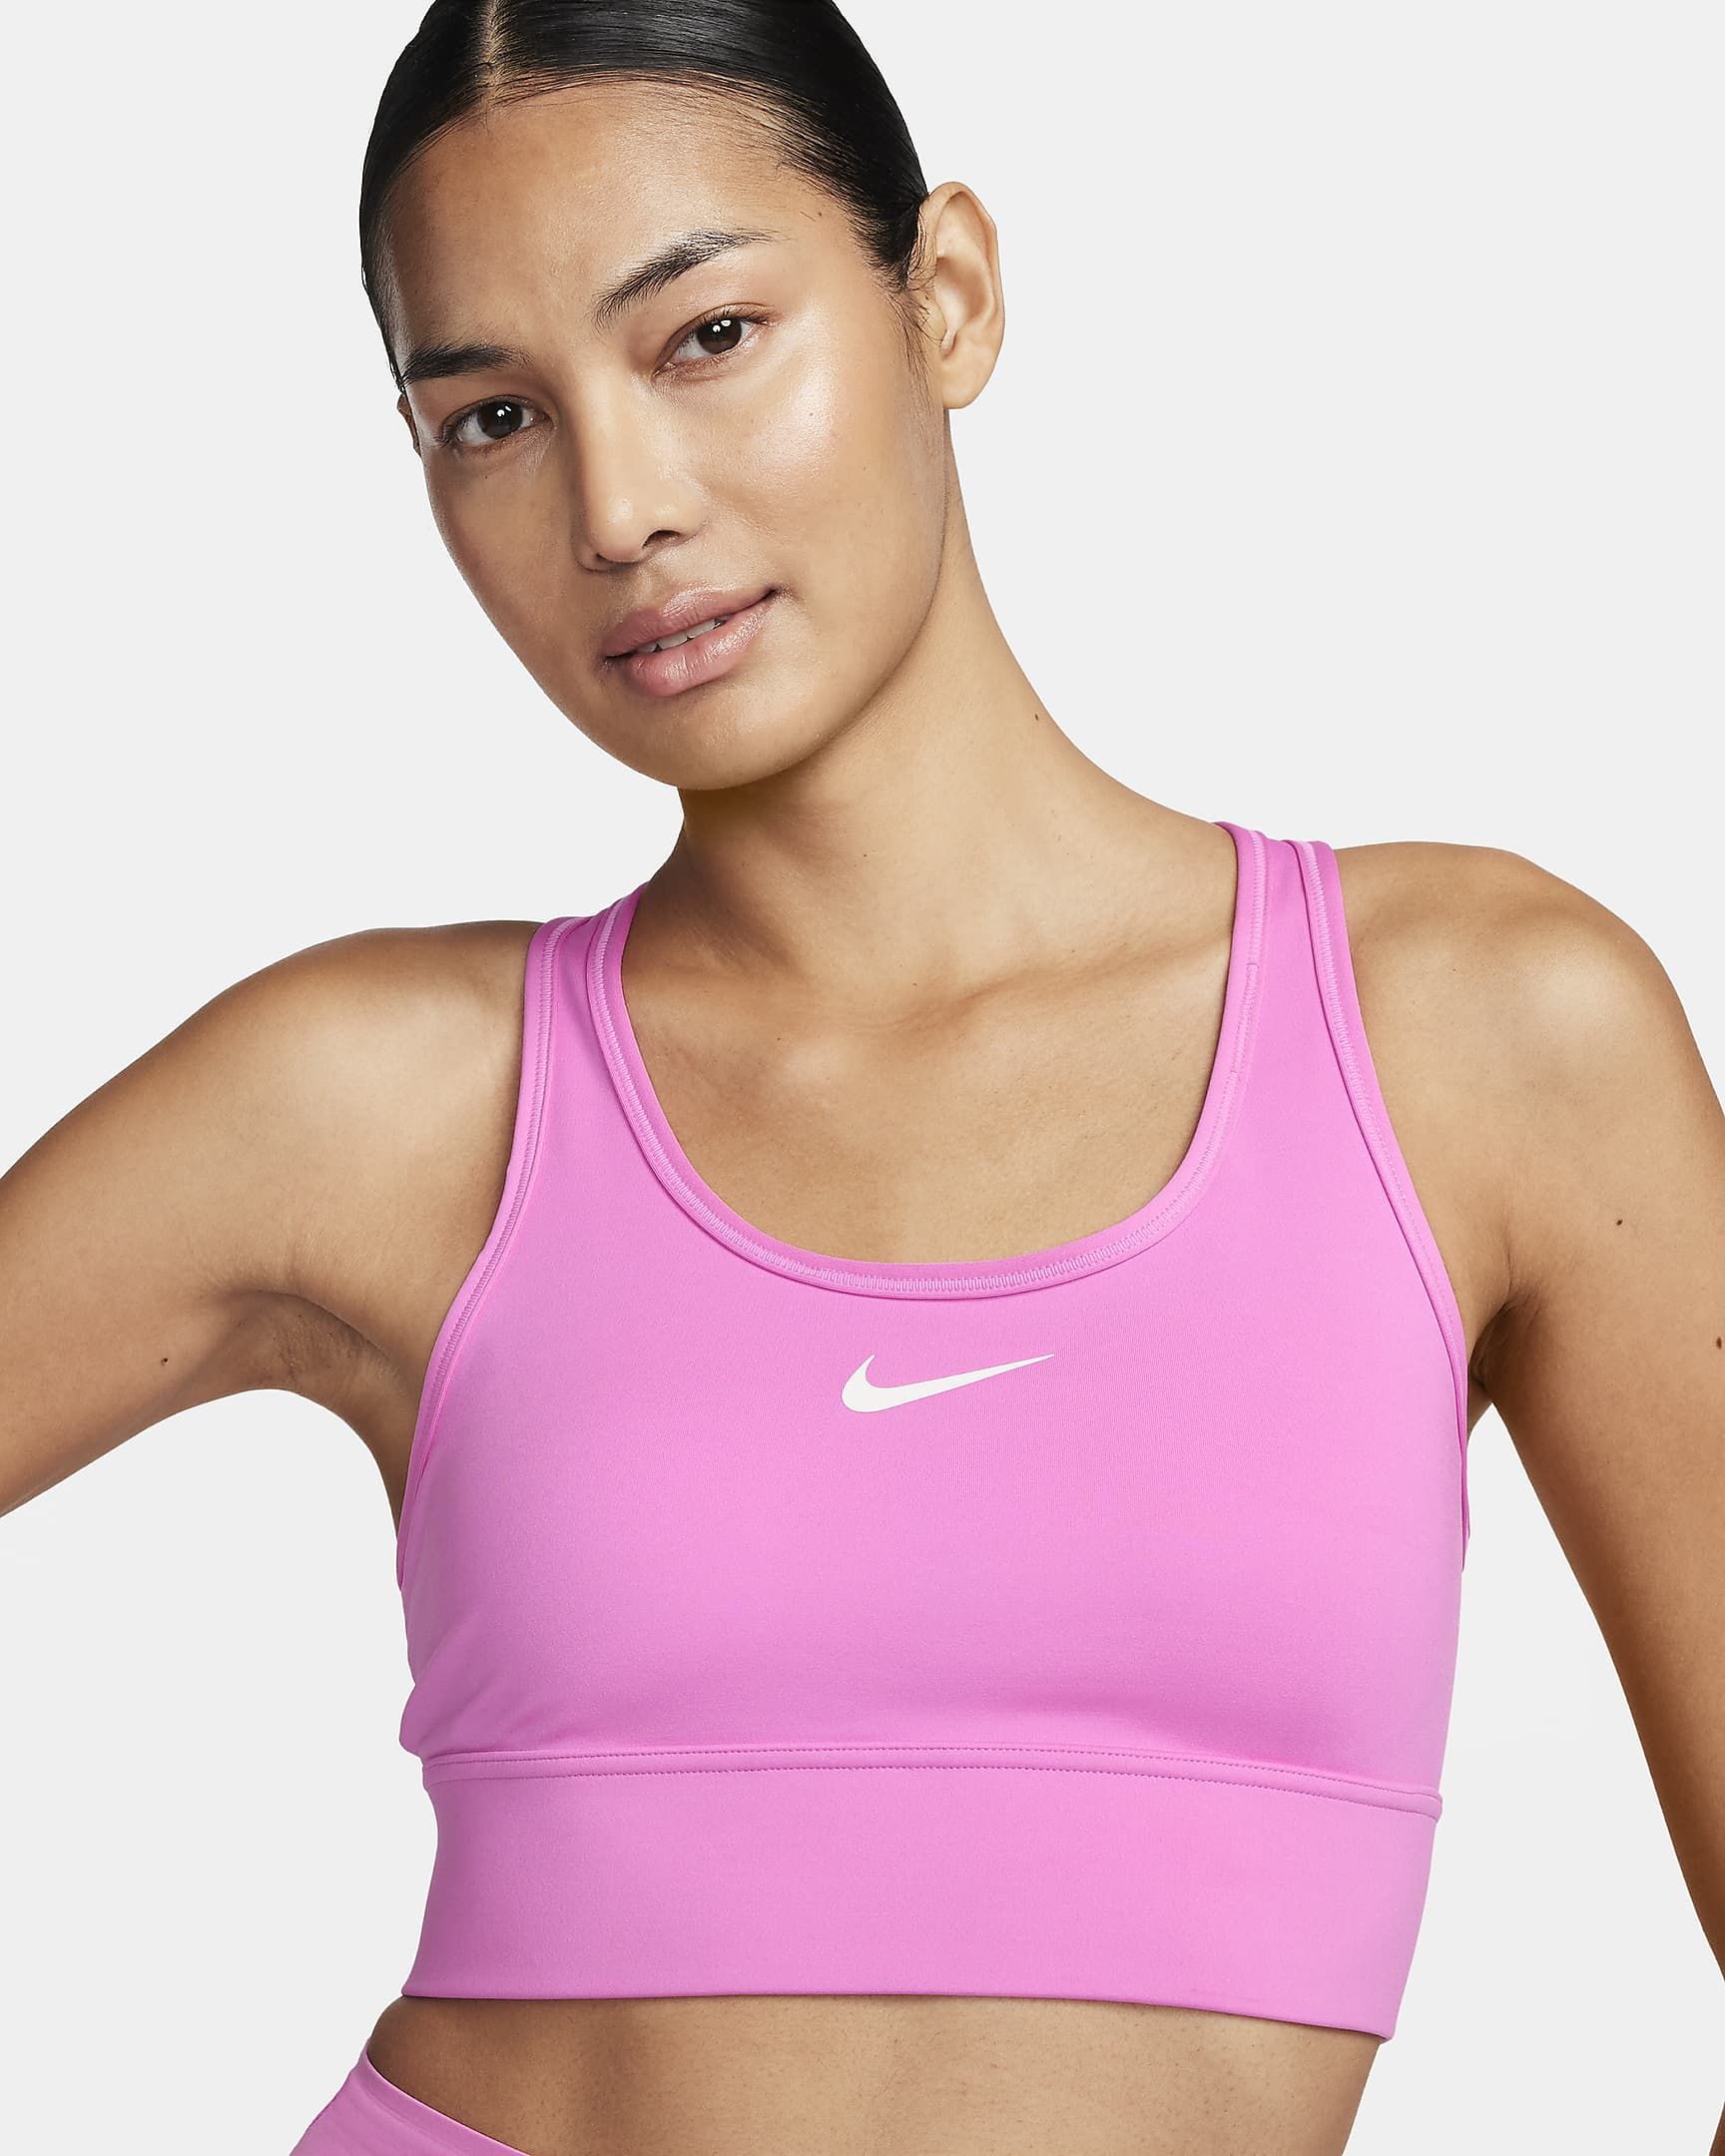 Nike Swoosh Medium SupportWomen's Padded Longline Sports Bra$50 | Nike (US)